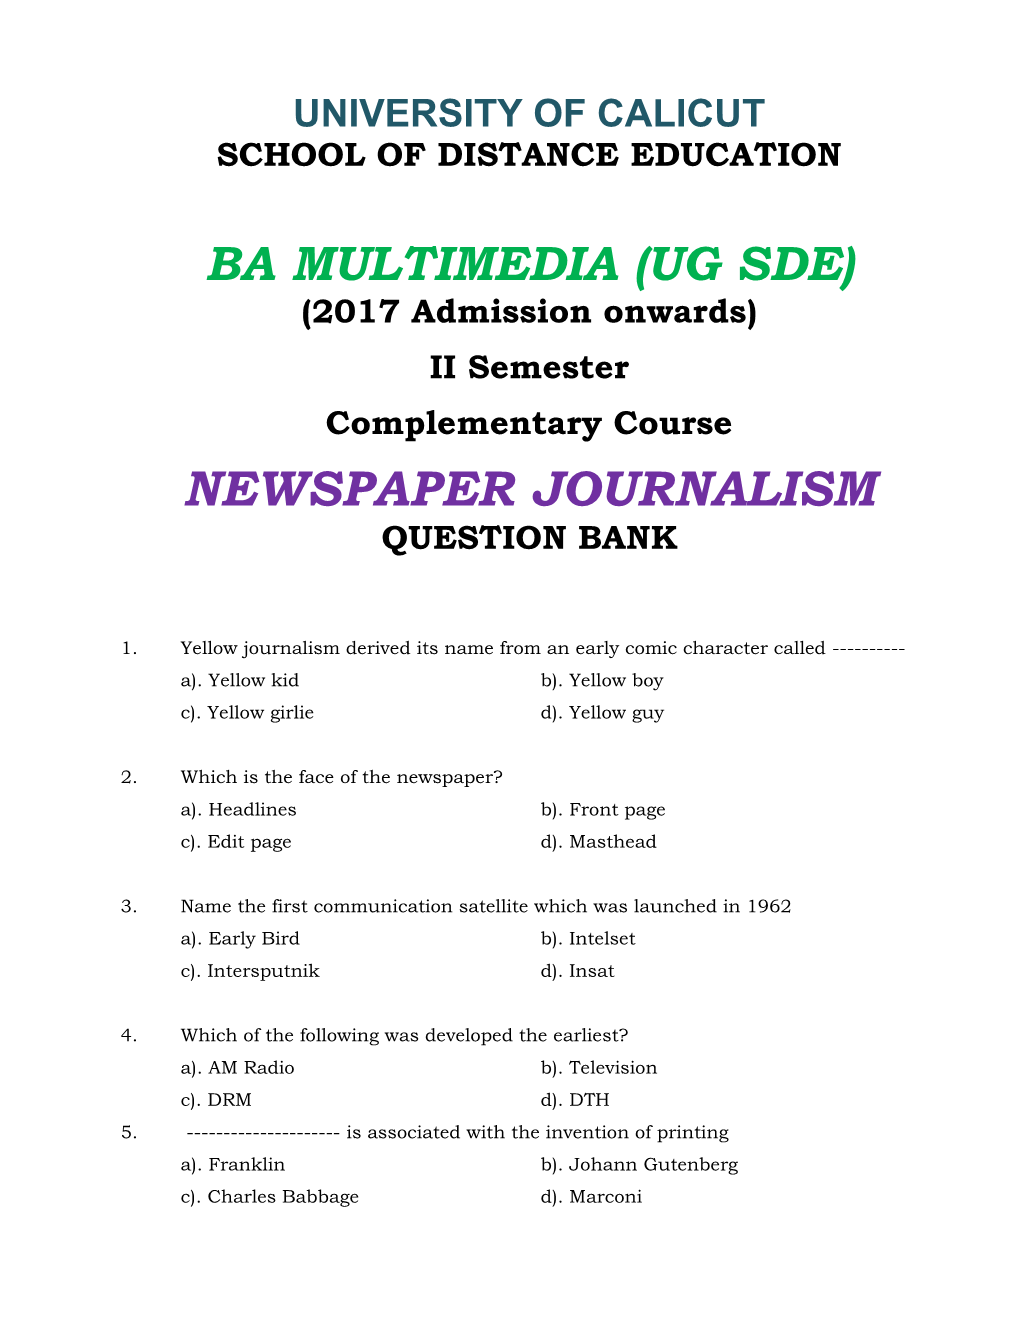 Newspaper Journalism Question Bank